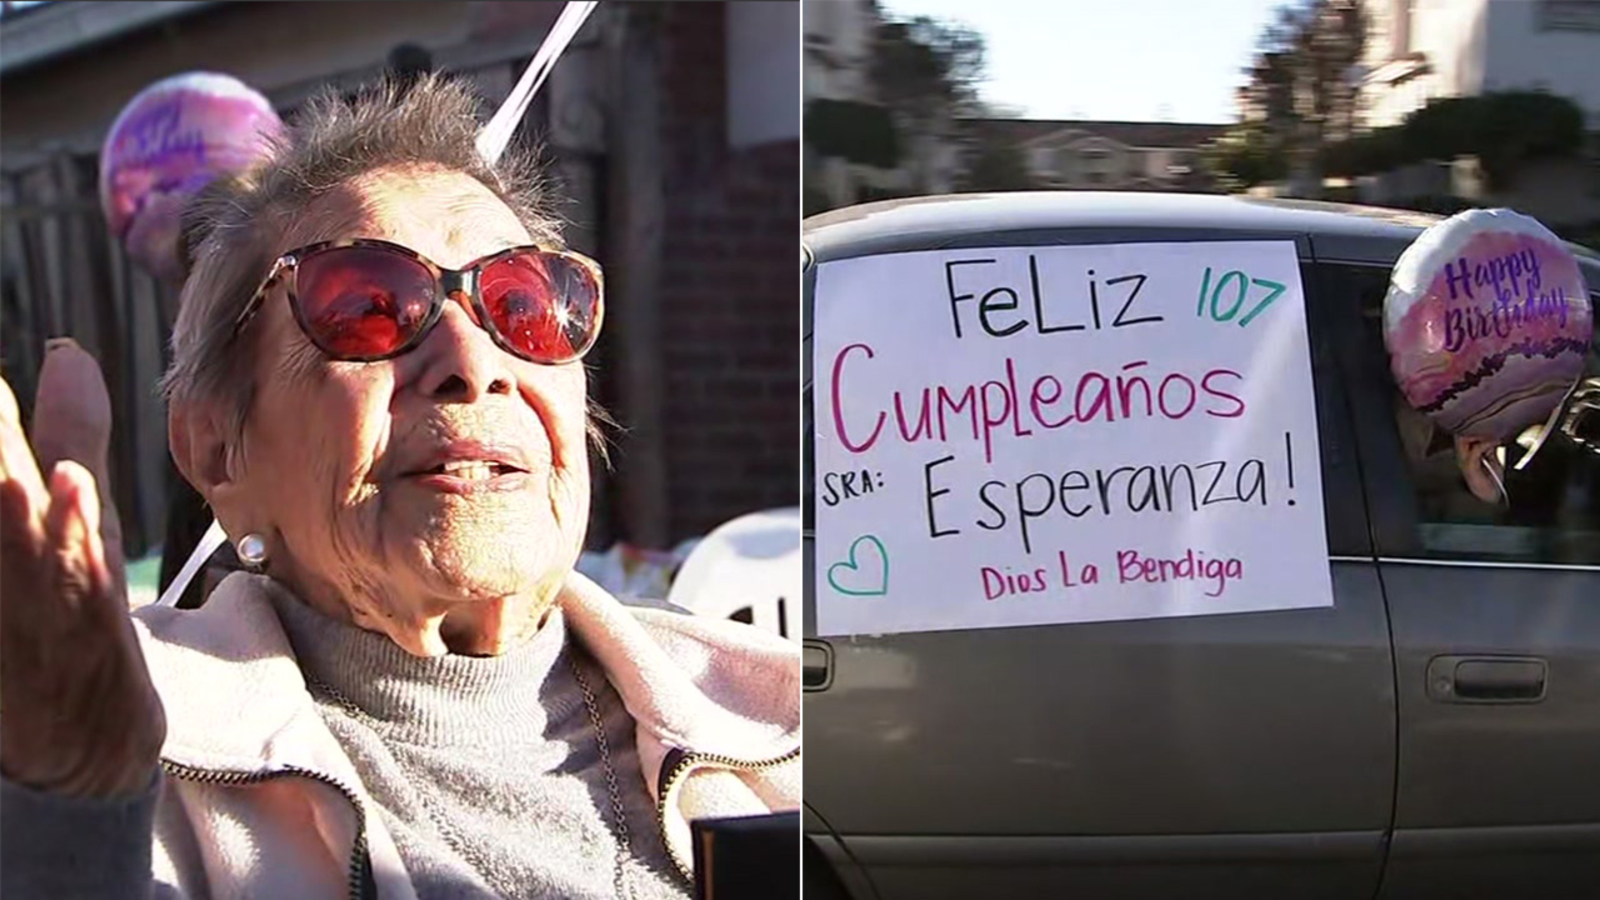 Santa Clara grandmother celebrates 107th birthday with car caravan